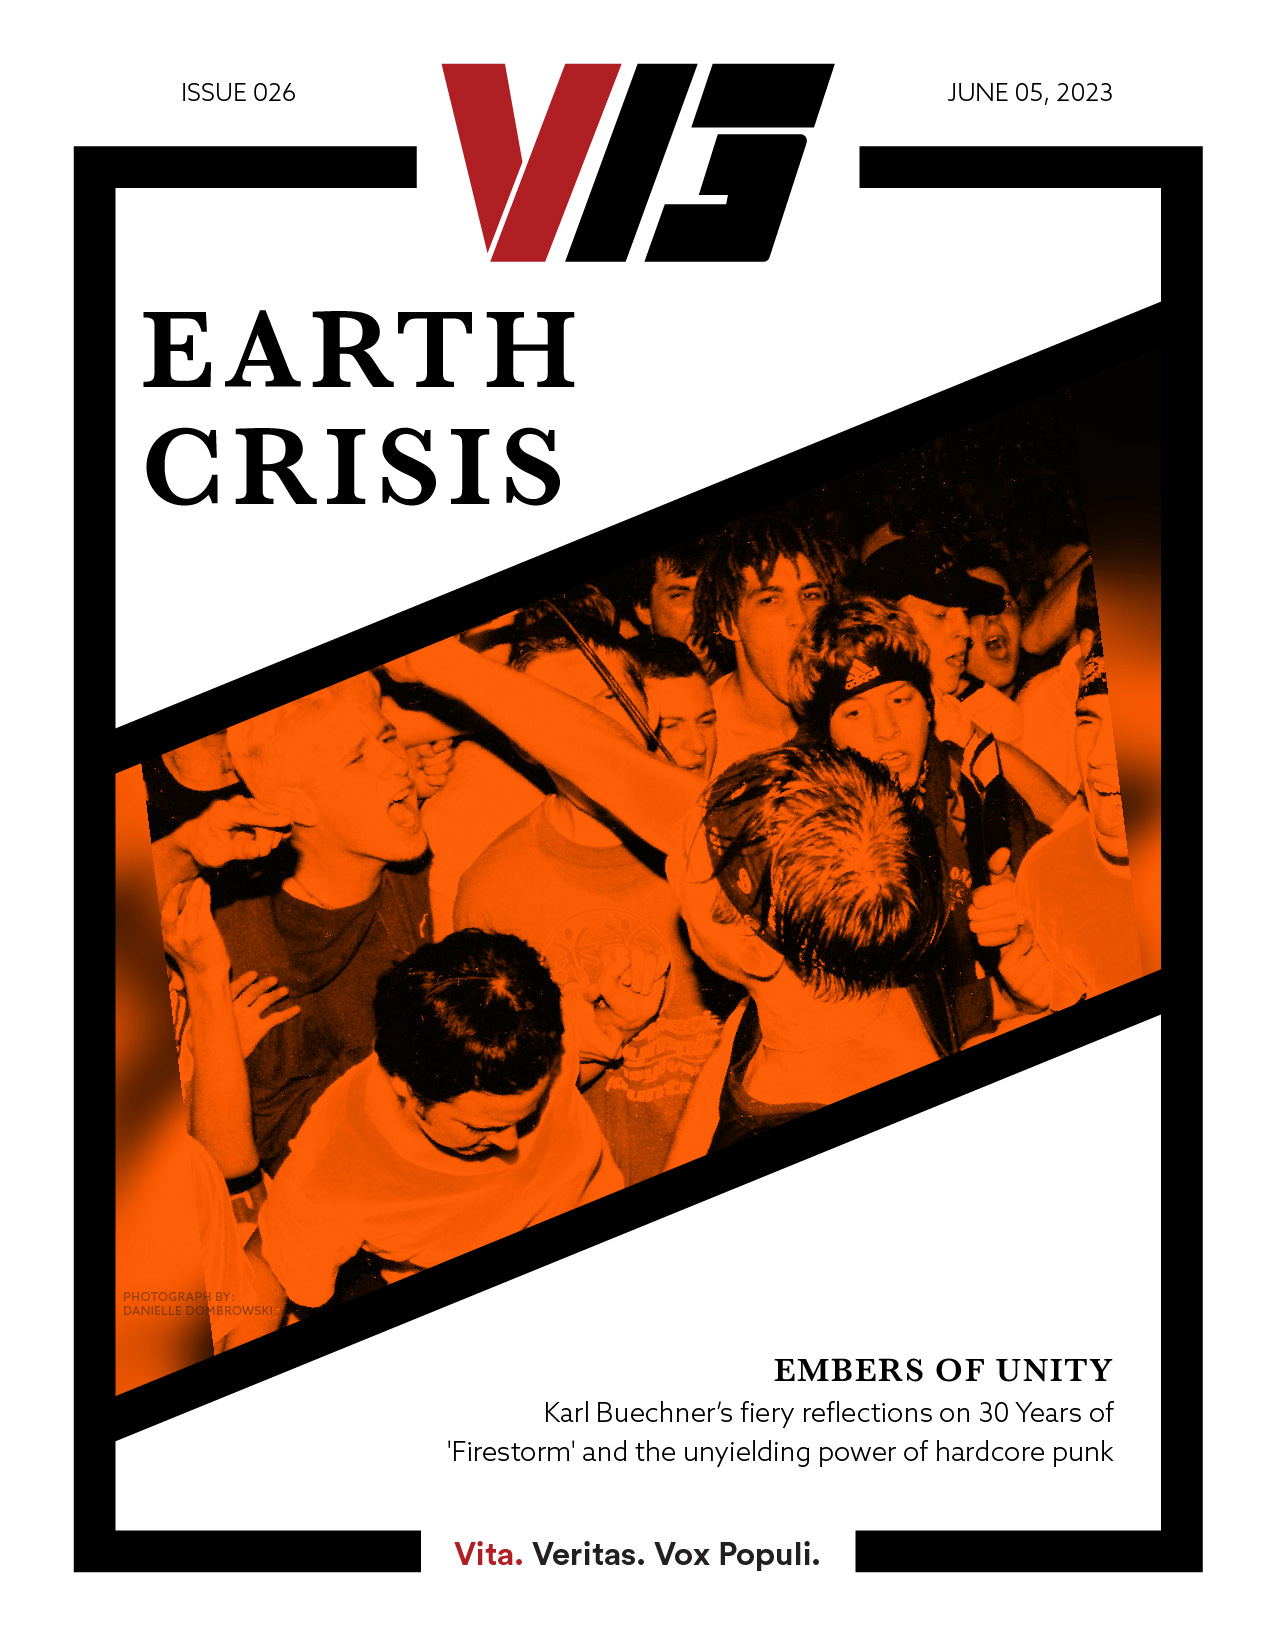 V13 Cover Story 026 - Earth Crisis - June 5, 2023